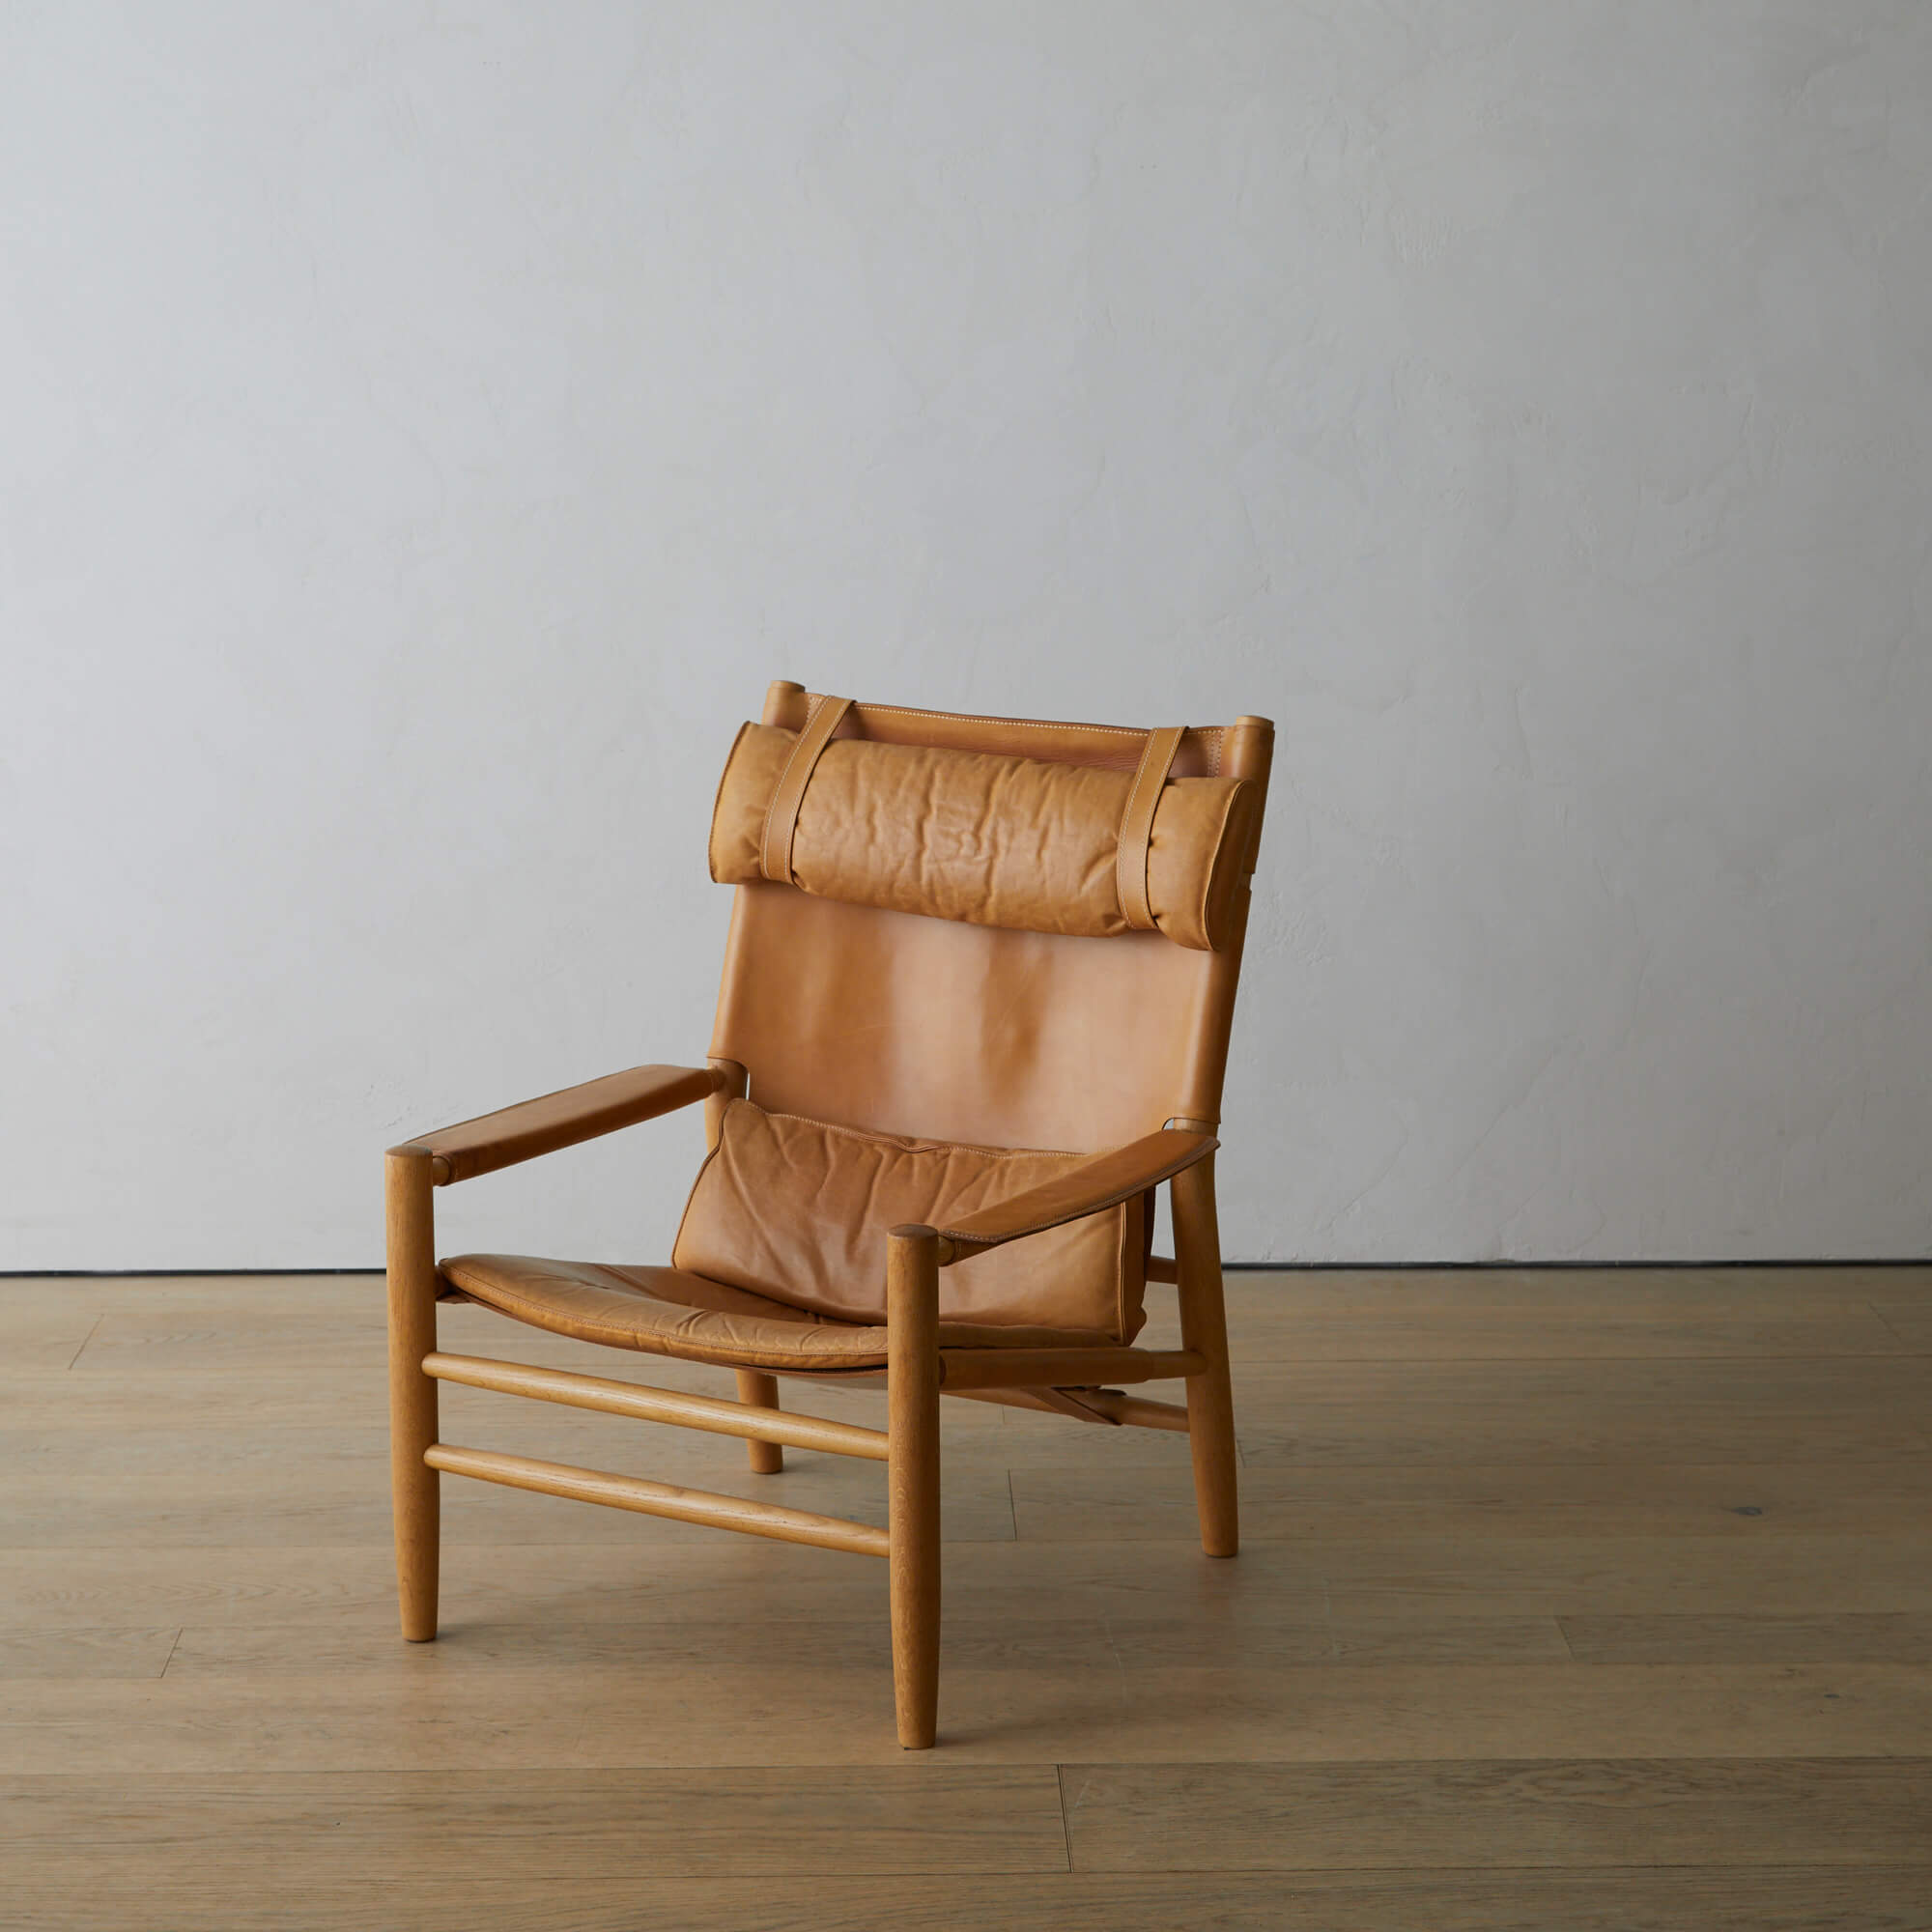 Kenneth Bergenblad "Dormi" Lounge Chair